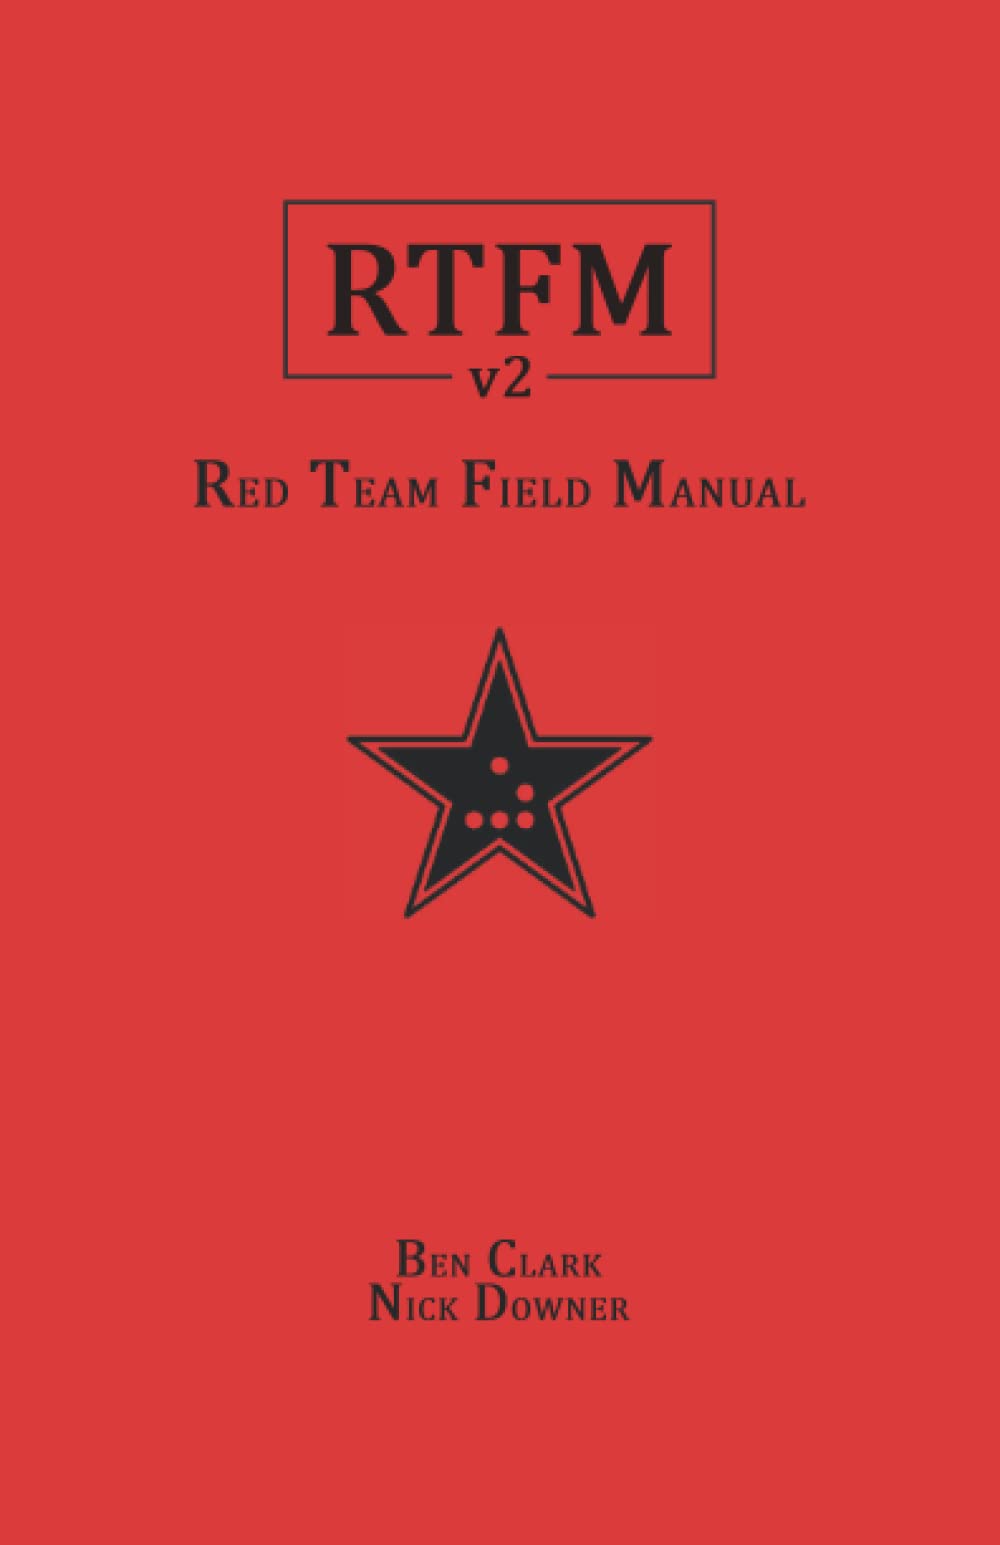 RTFM: Red Team Field Manual v2